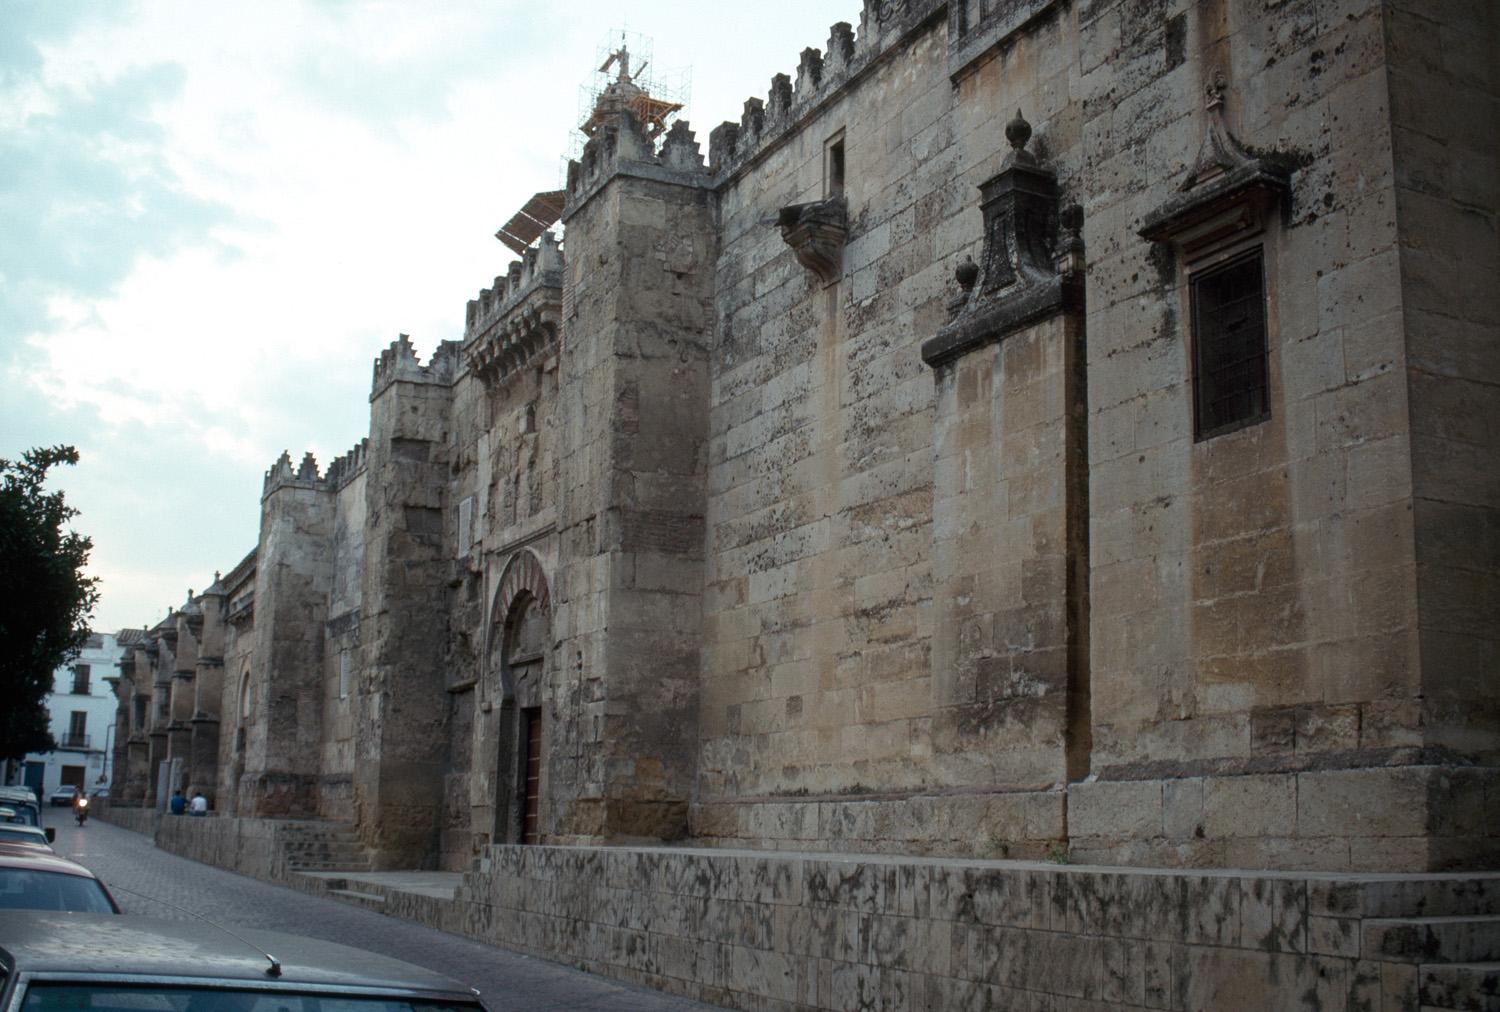 Mezquita de Córdoba - Exterior from northeast, with east portal